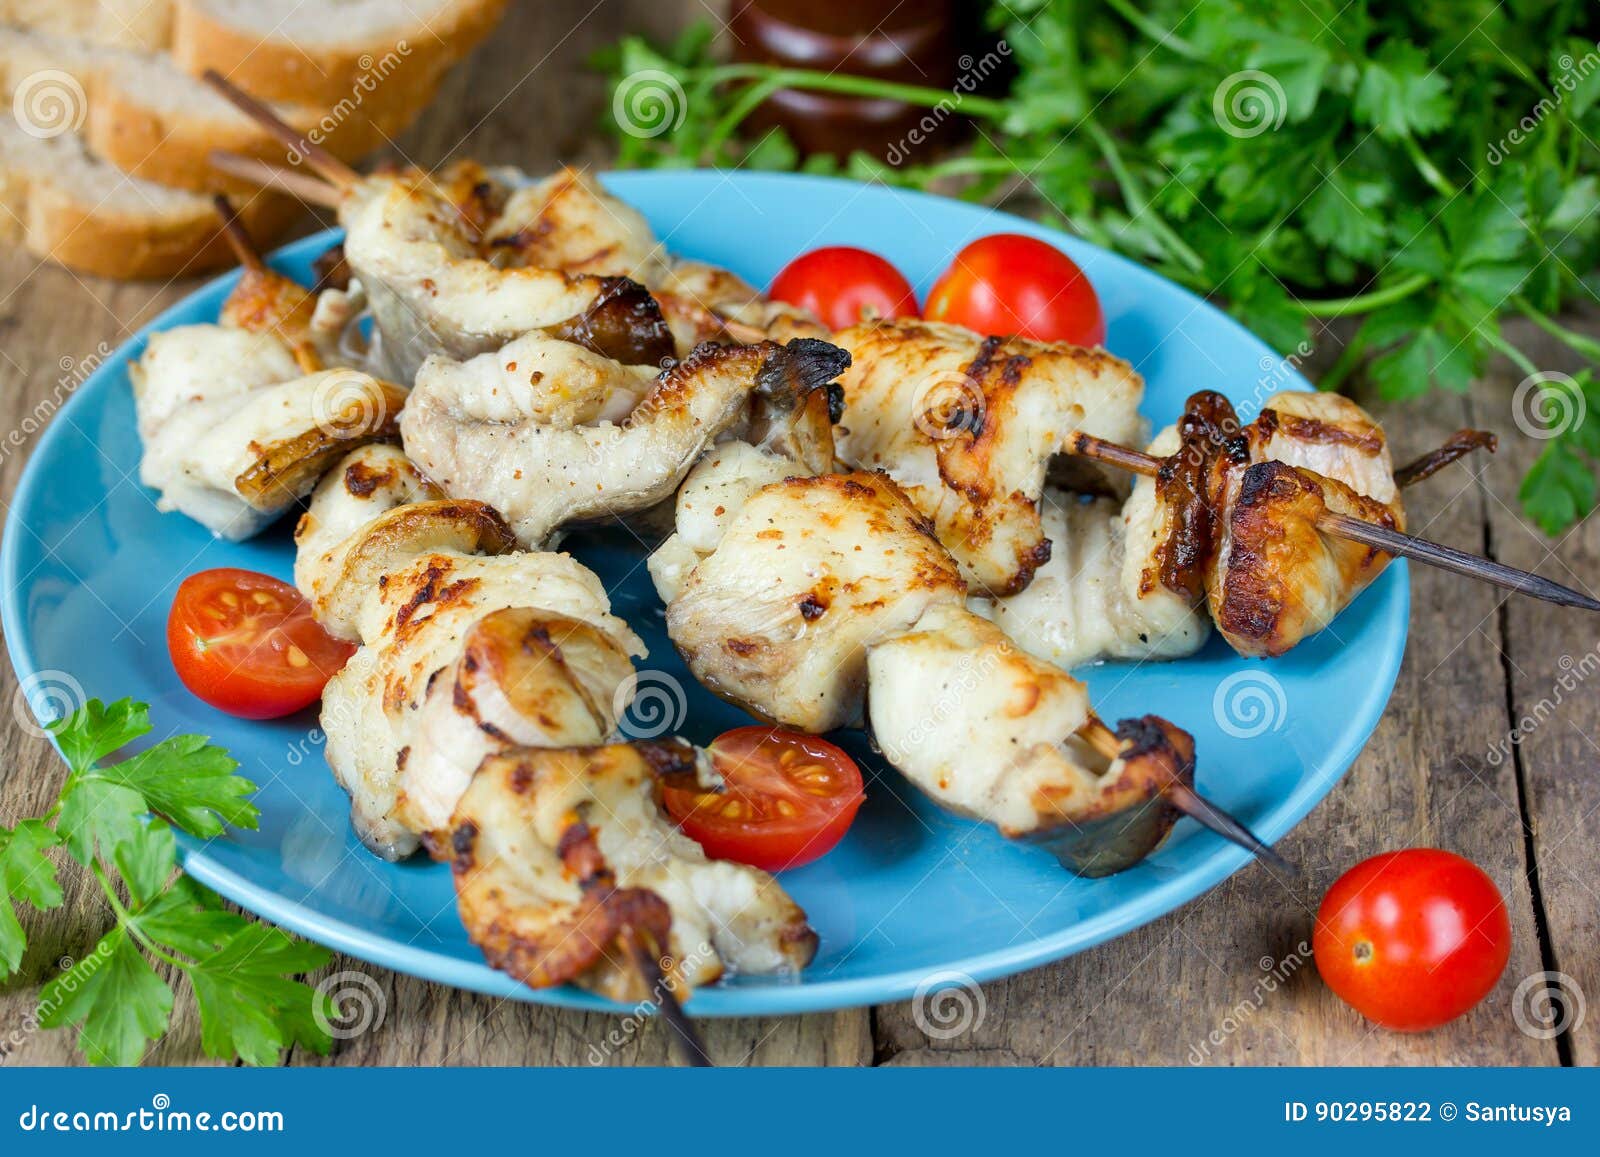 Catfish kebab stock photo. Image of lunch, picnic, dish - 90295822